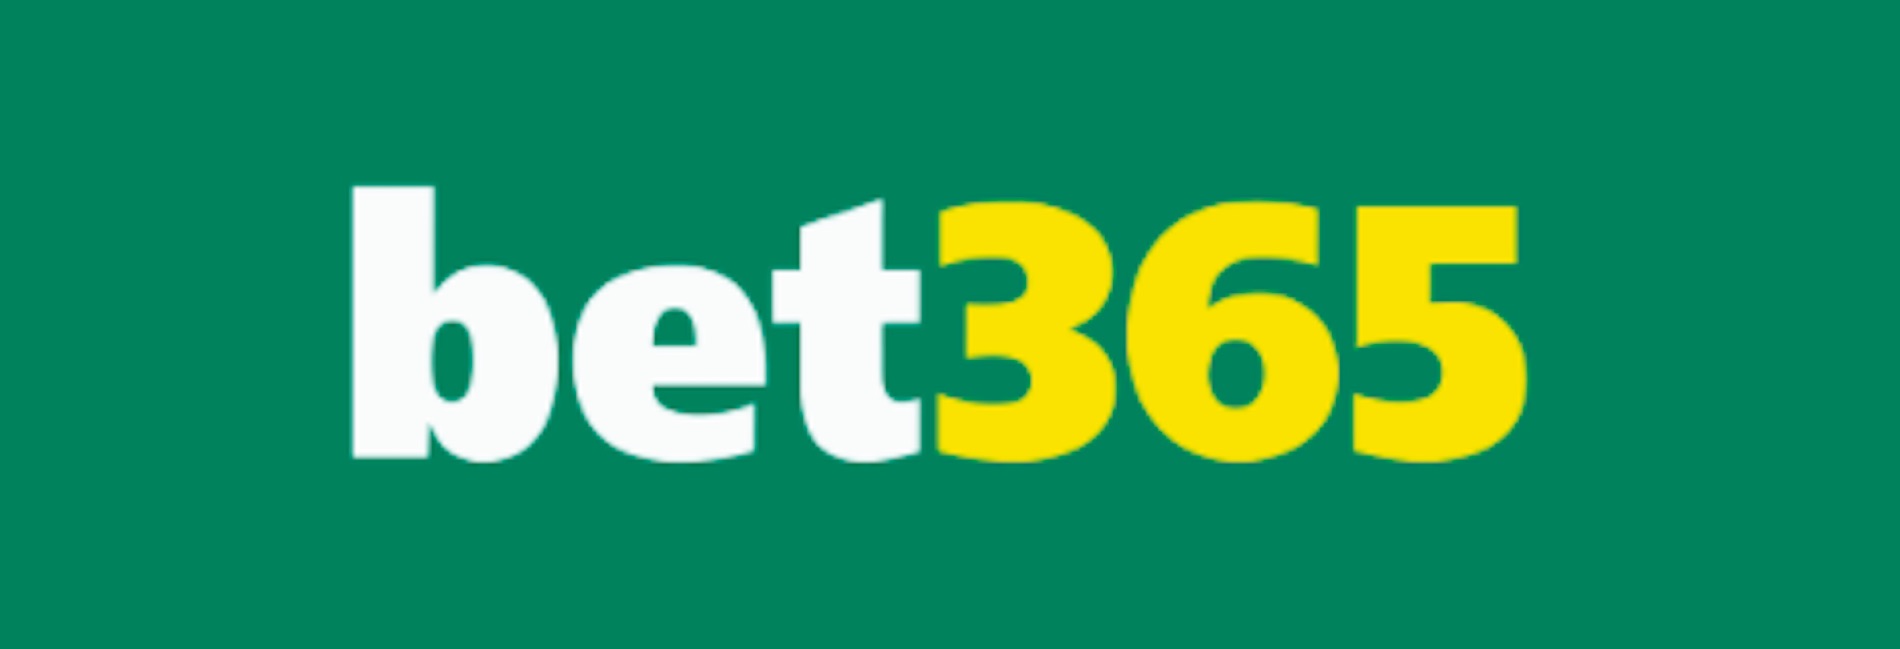 Bet365 Joins Ontario Market